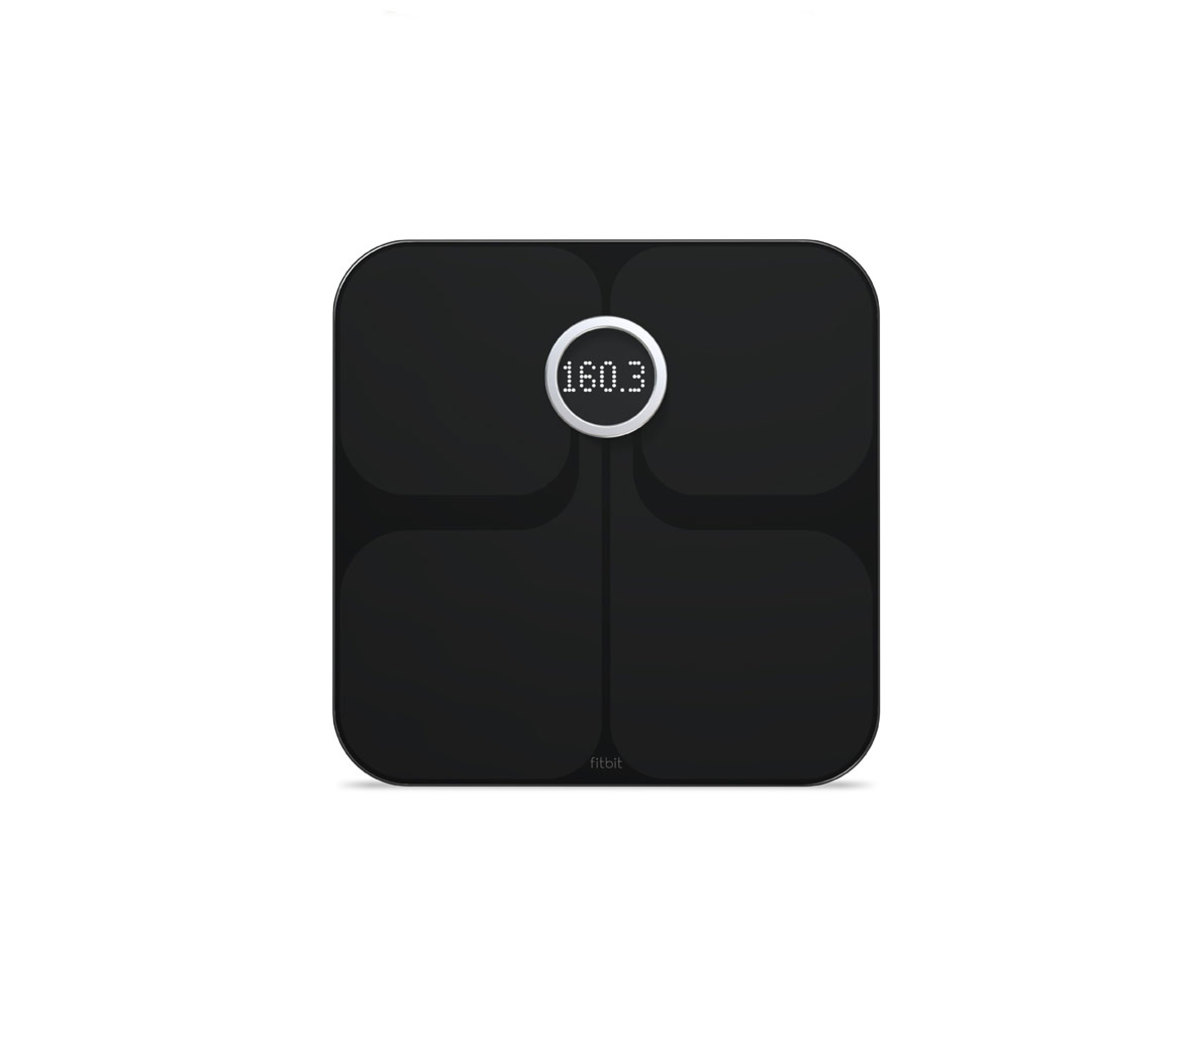  Fitbit Aria Wi-Fi Smart Scale, Black : Electronics